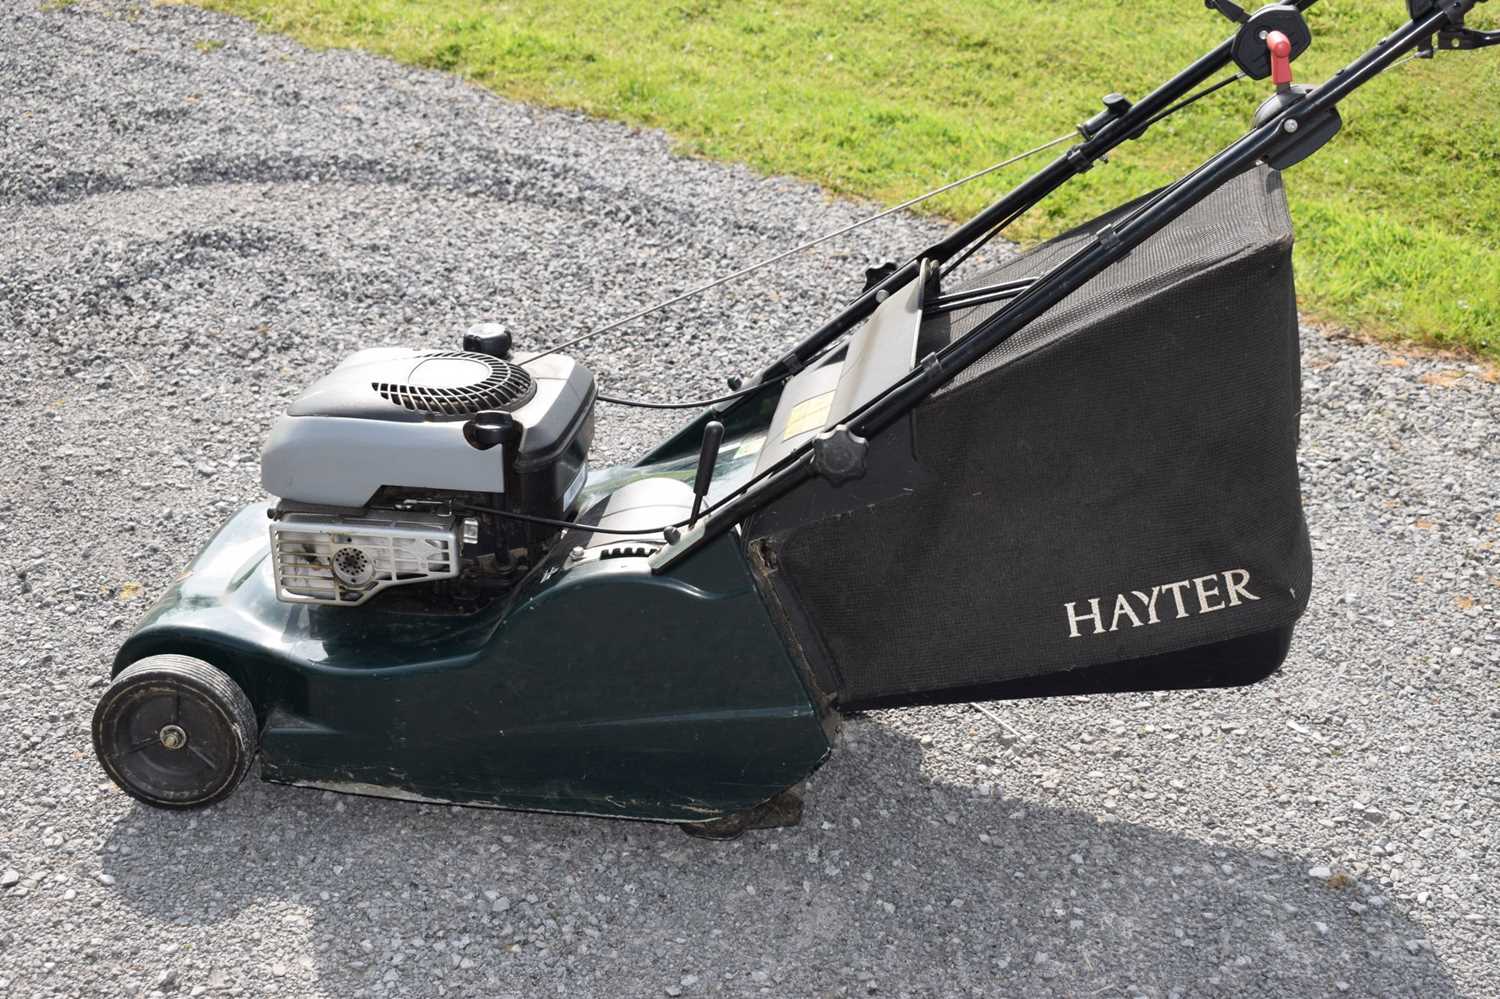 Hayter Harrier 48 lawn mower - Image 4 of 7